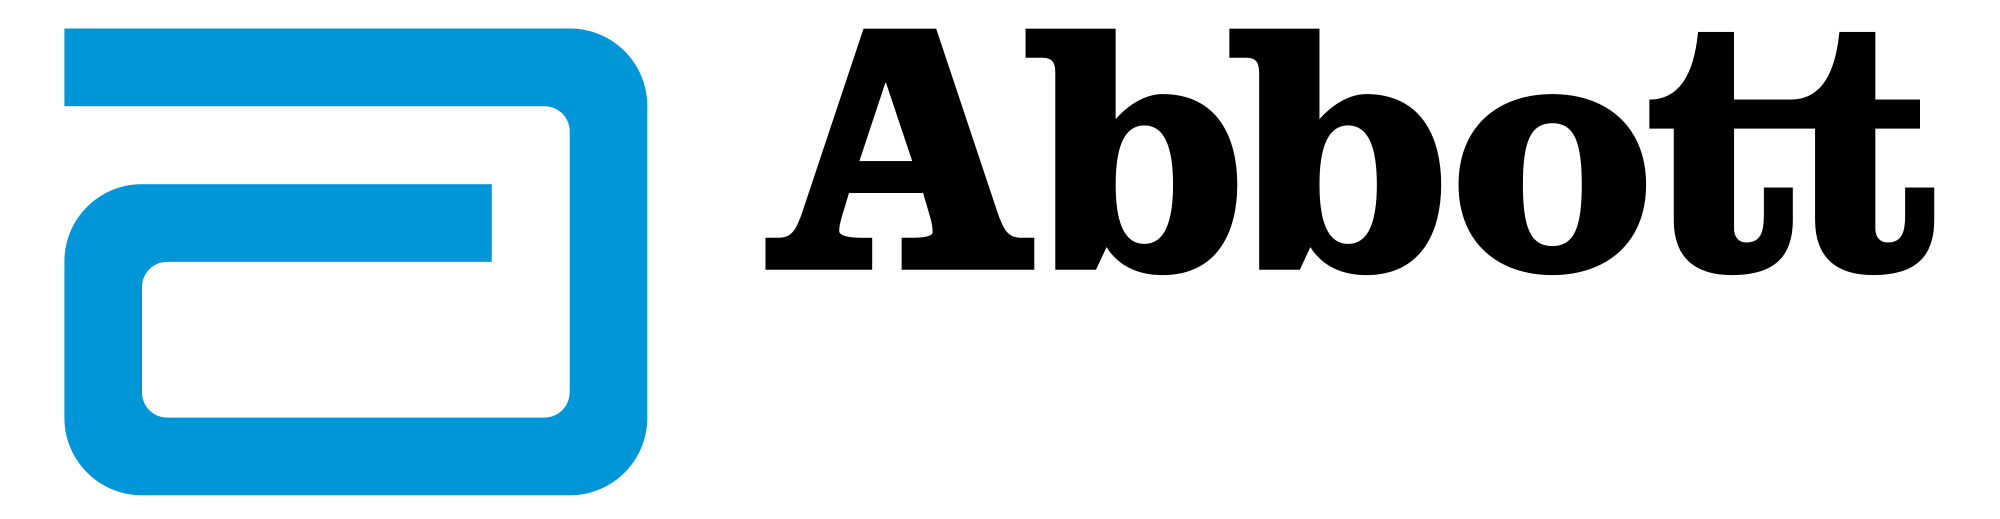 abbott-laboratories-logo.png